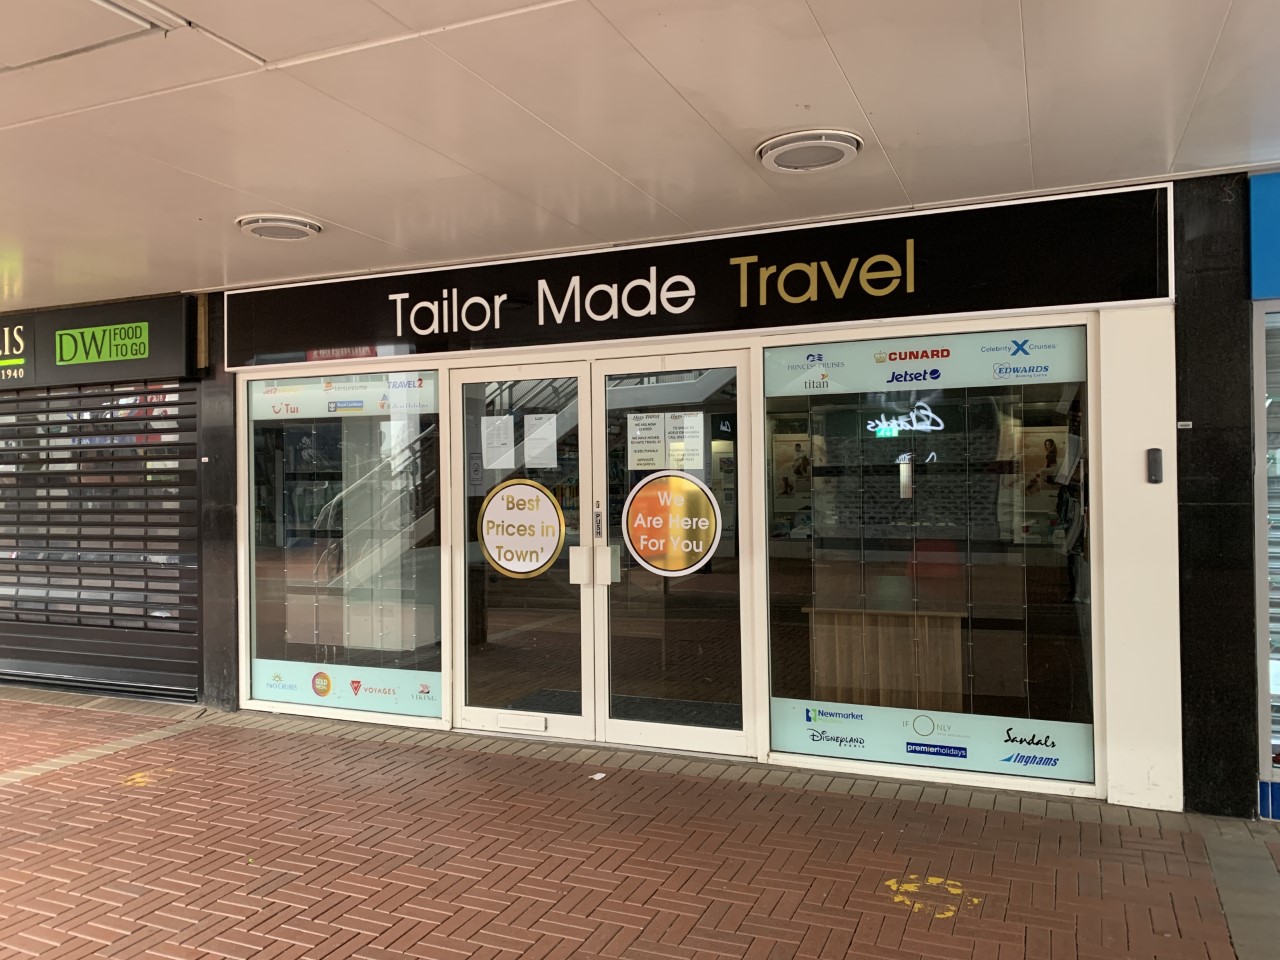 A closed travel agent shop